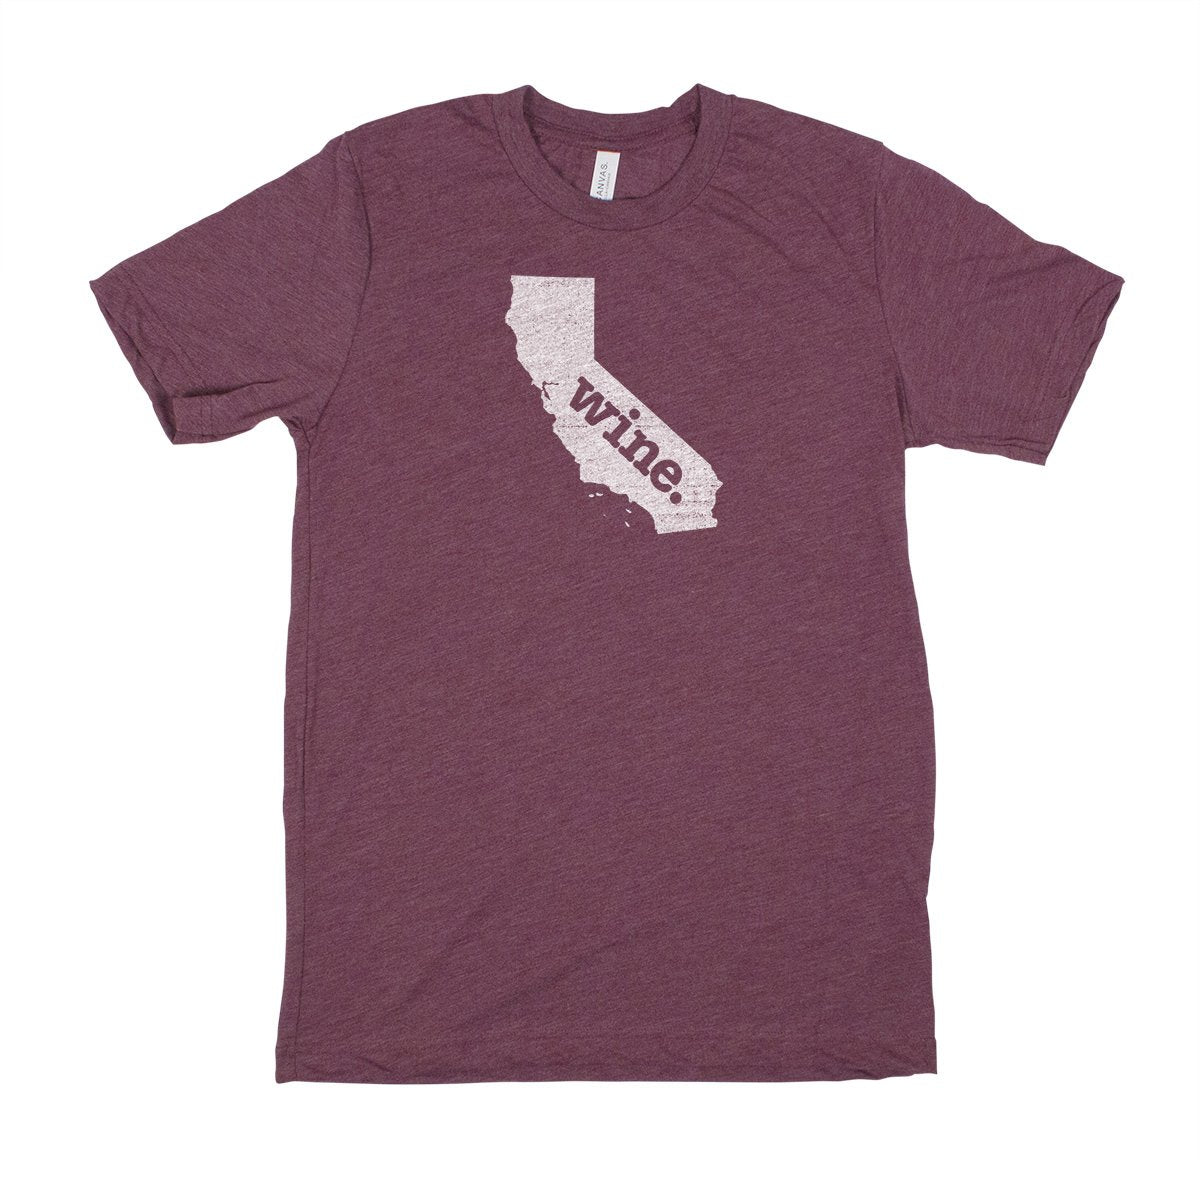 run. Men's Unisex T-Shirt - North Dakota